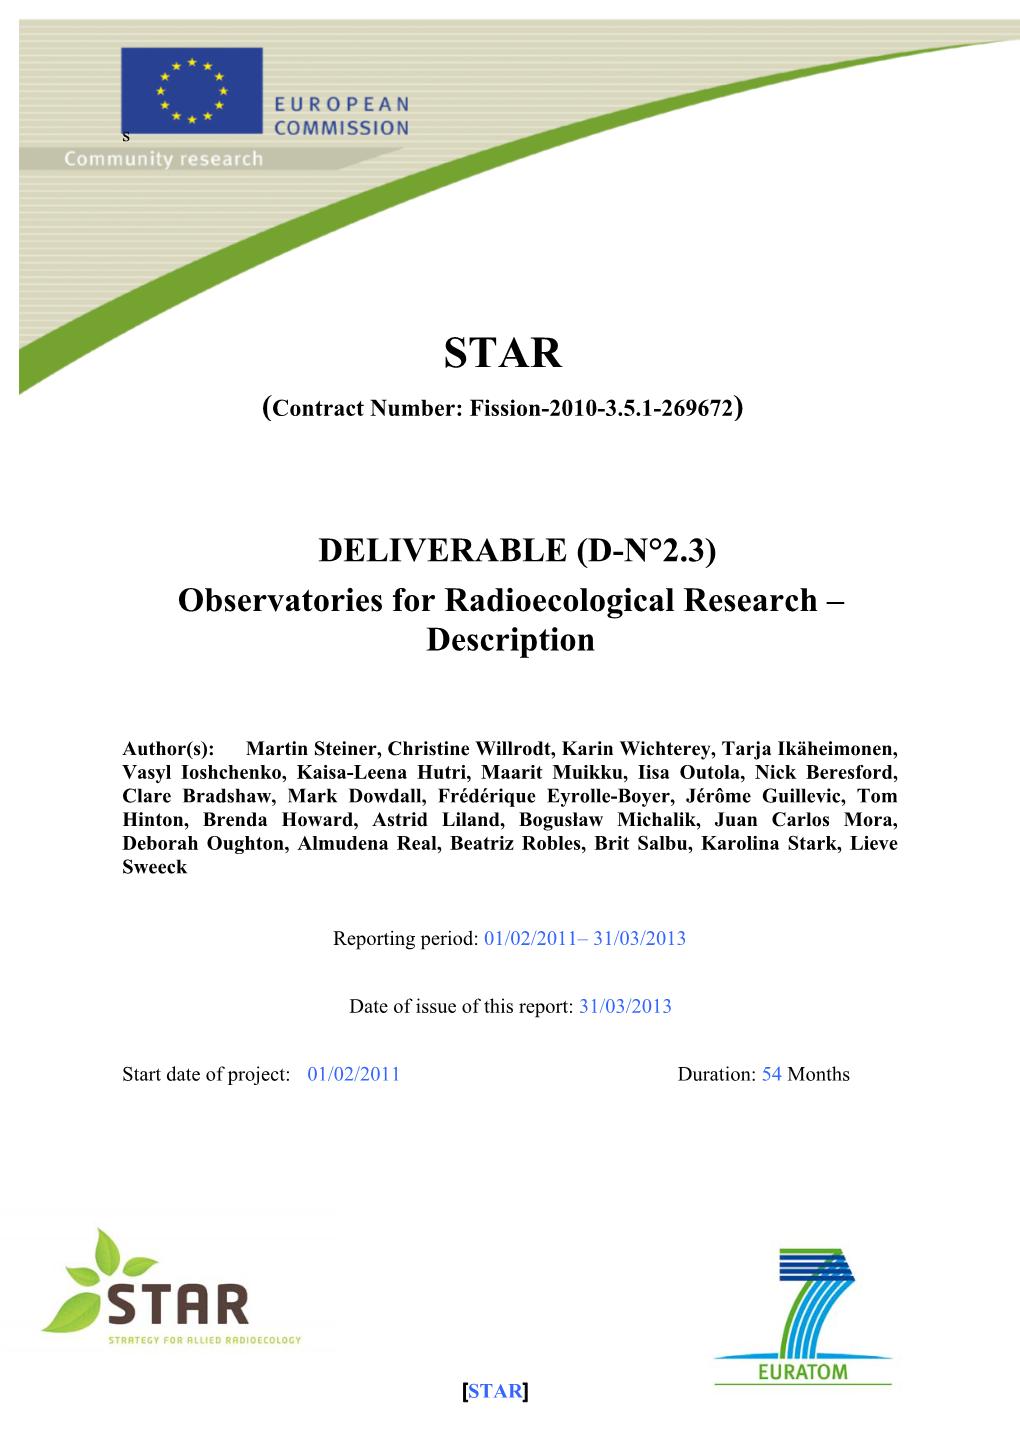 DELIVERABLE (D-N°2.3) Observatories for Radioecological Research – Description